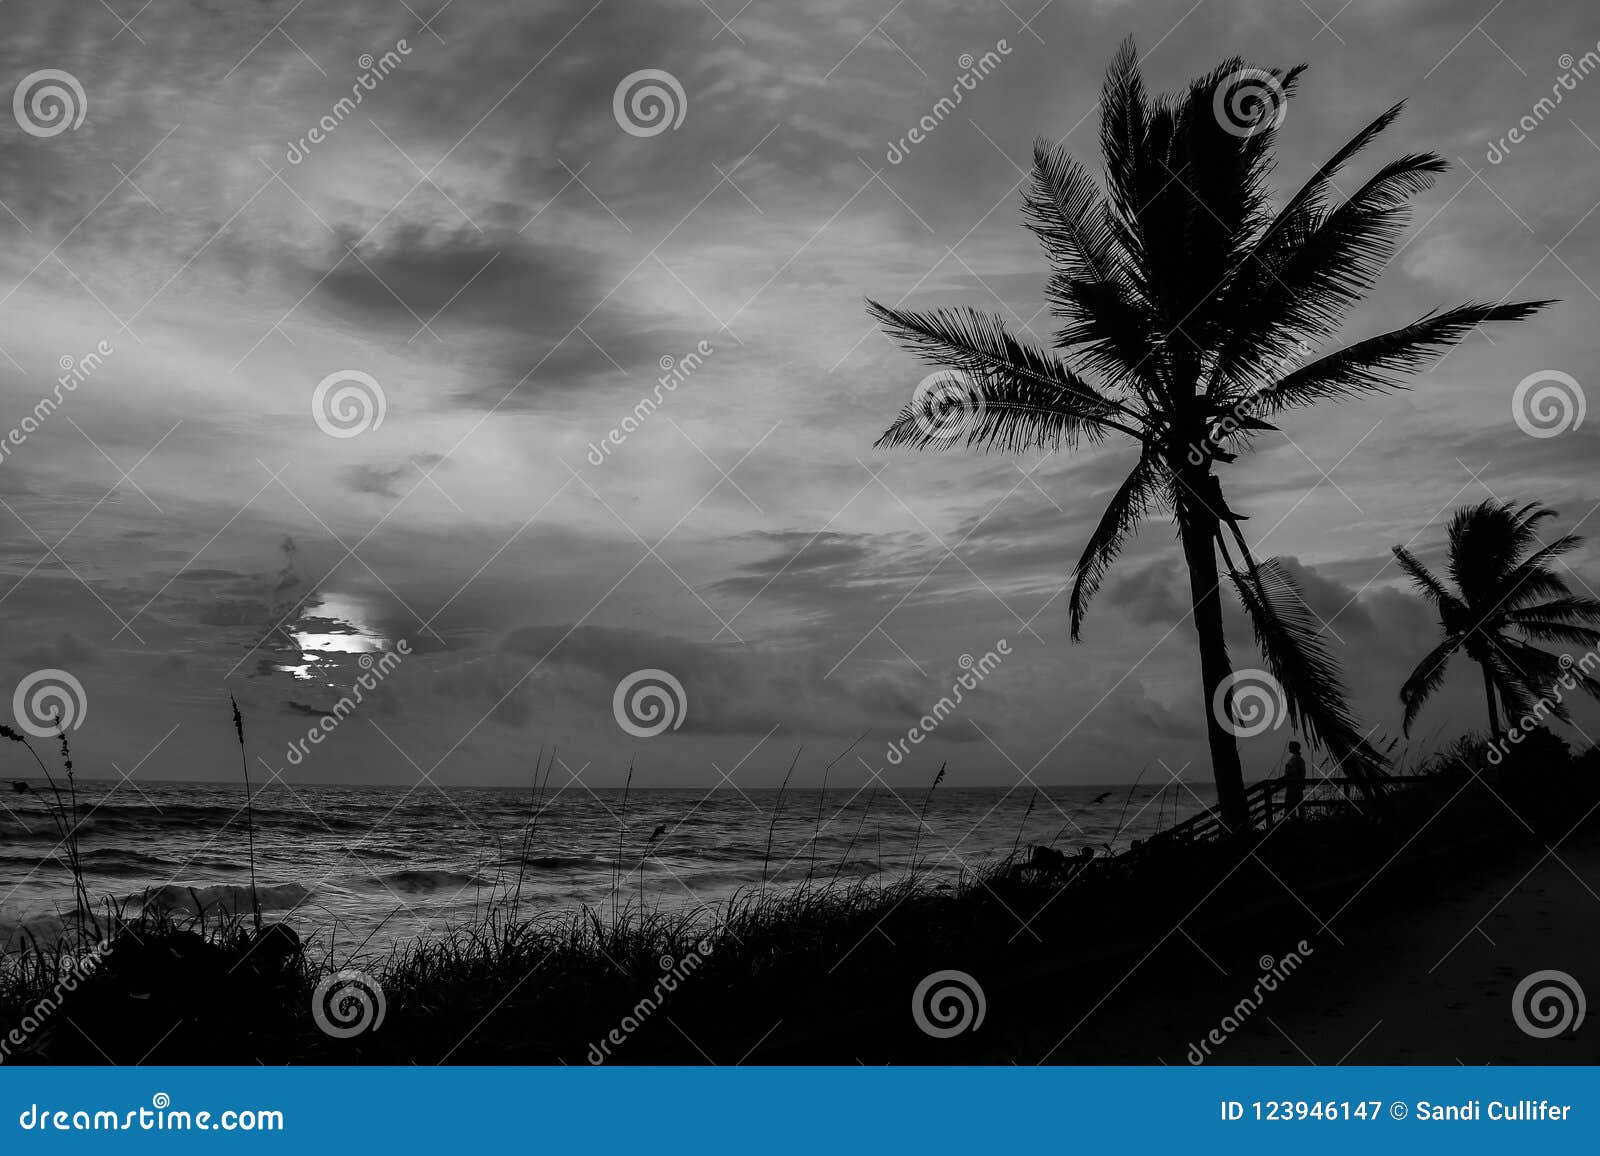 Watching the Black and White Sunrise Stock Image - Image of dunes ...